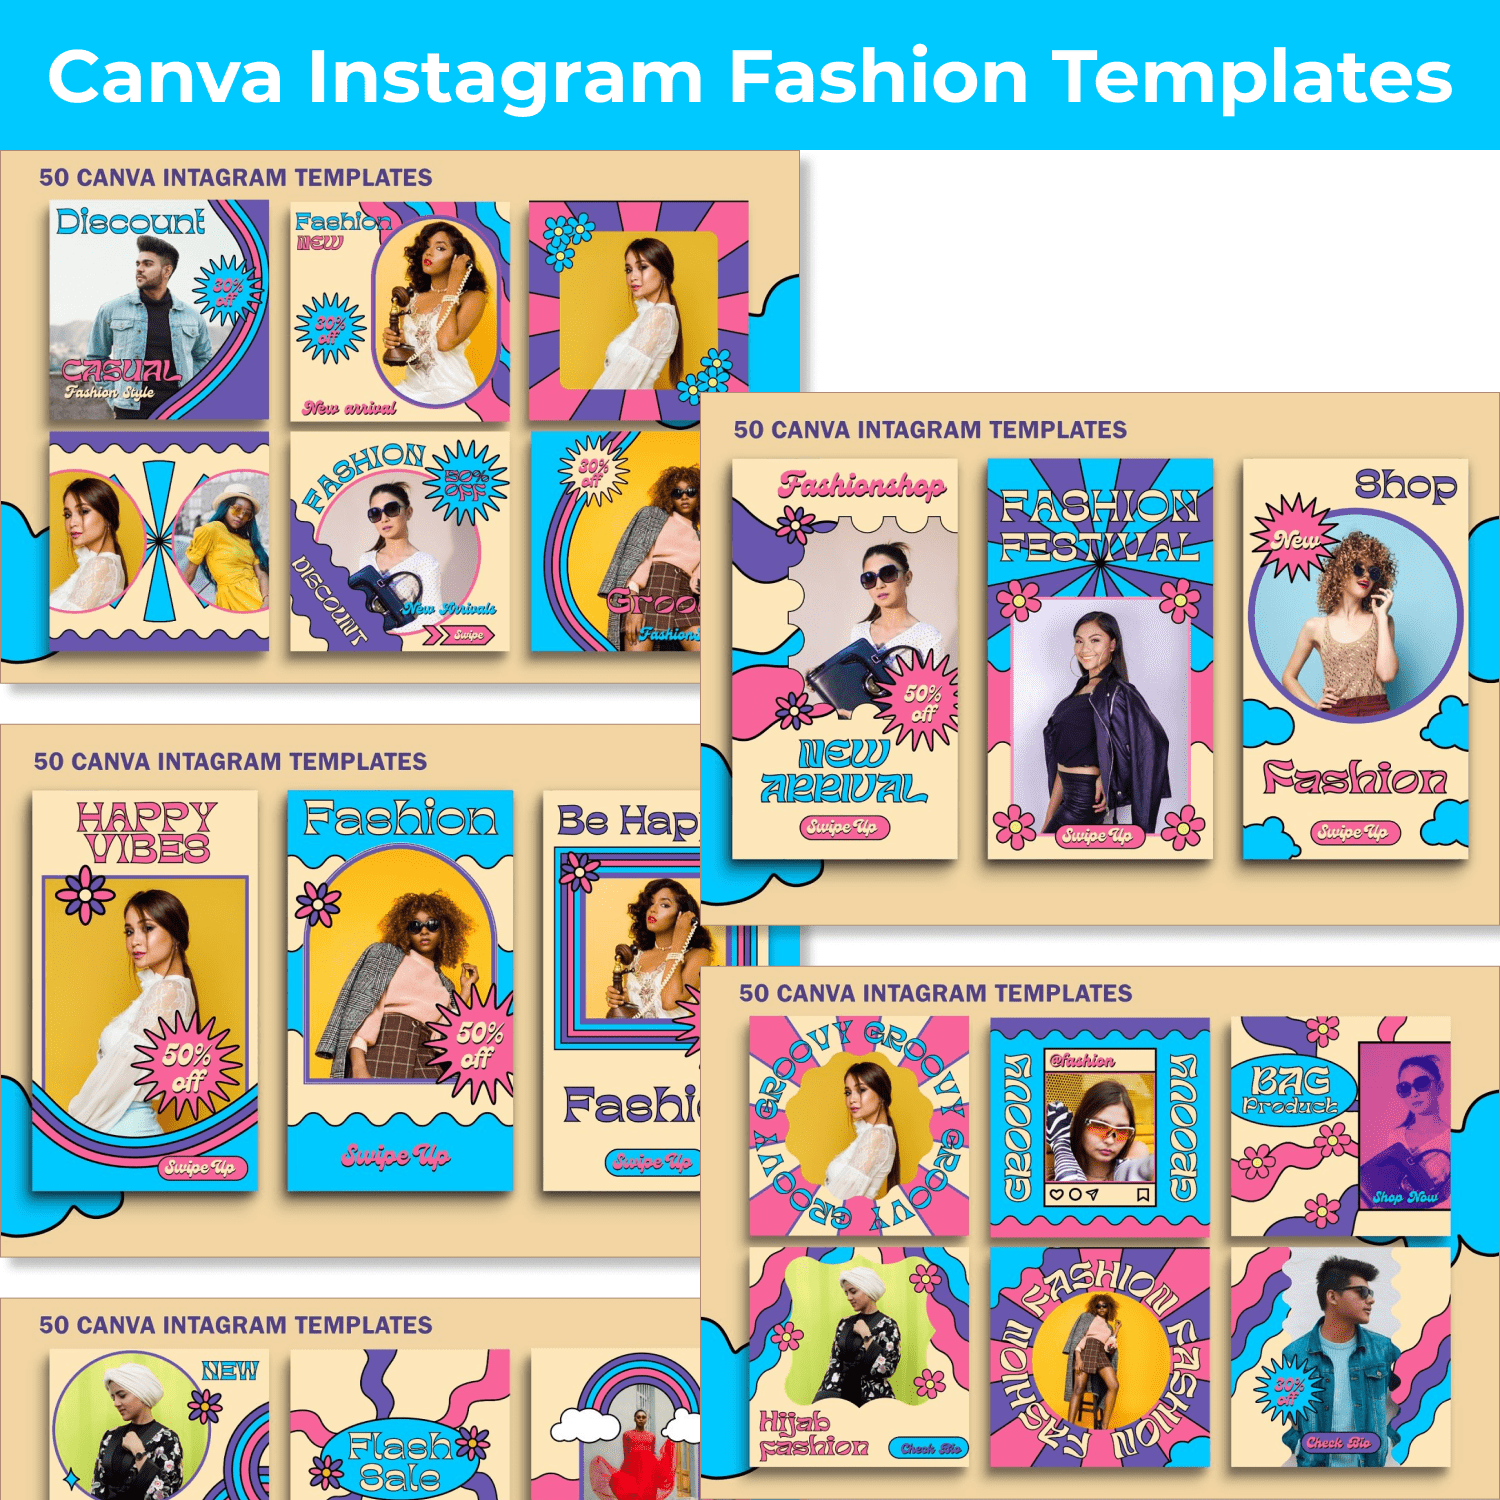 Canva Instagram Fashion Templates main cover.